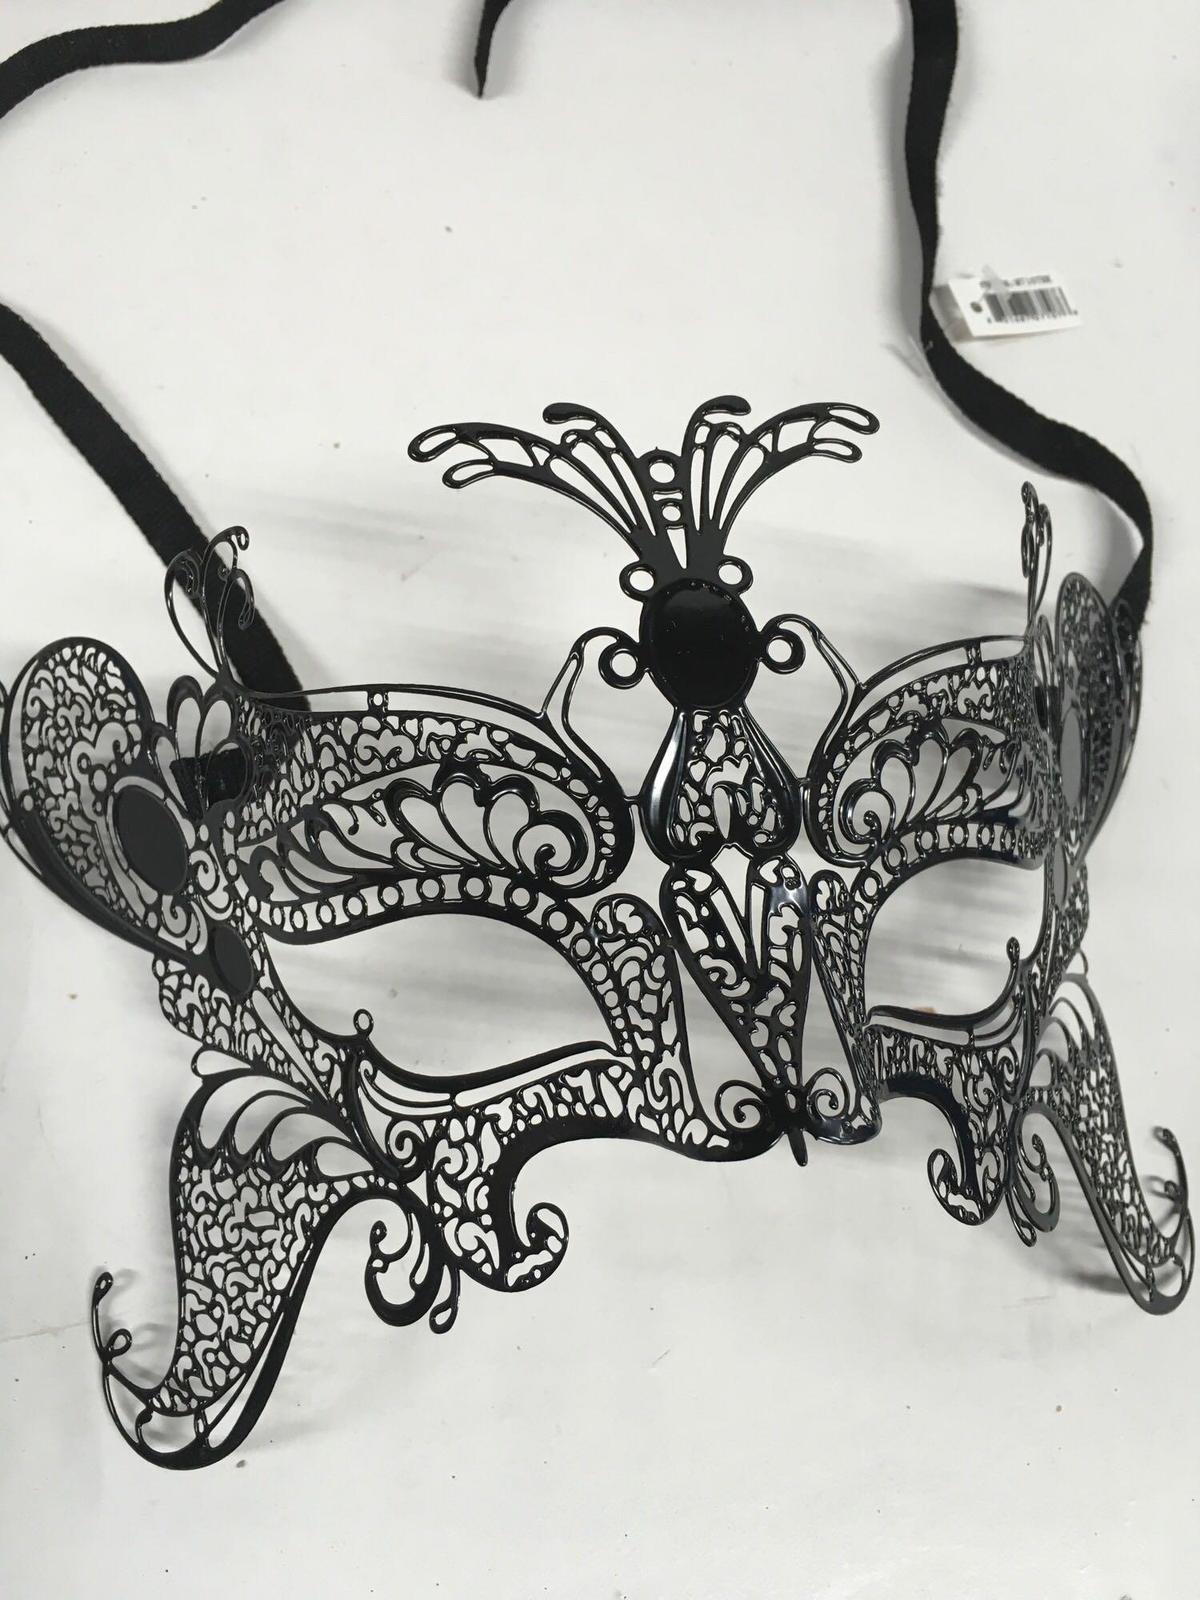 New metal black butterfly style eye masks